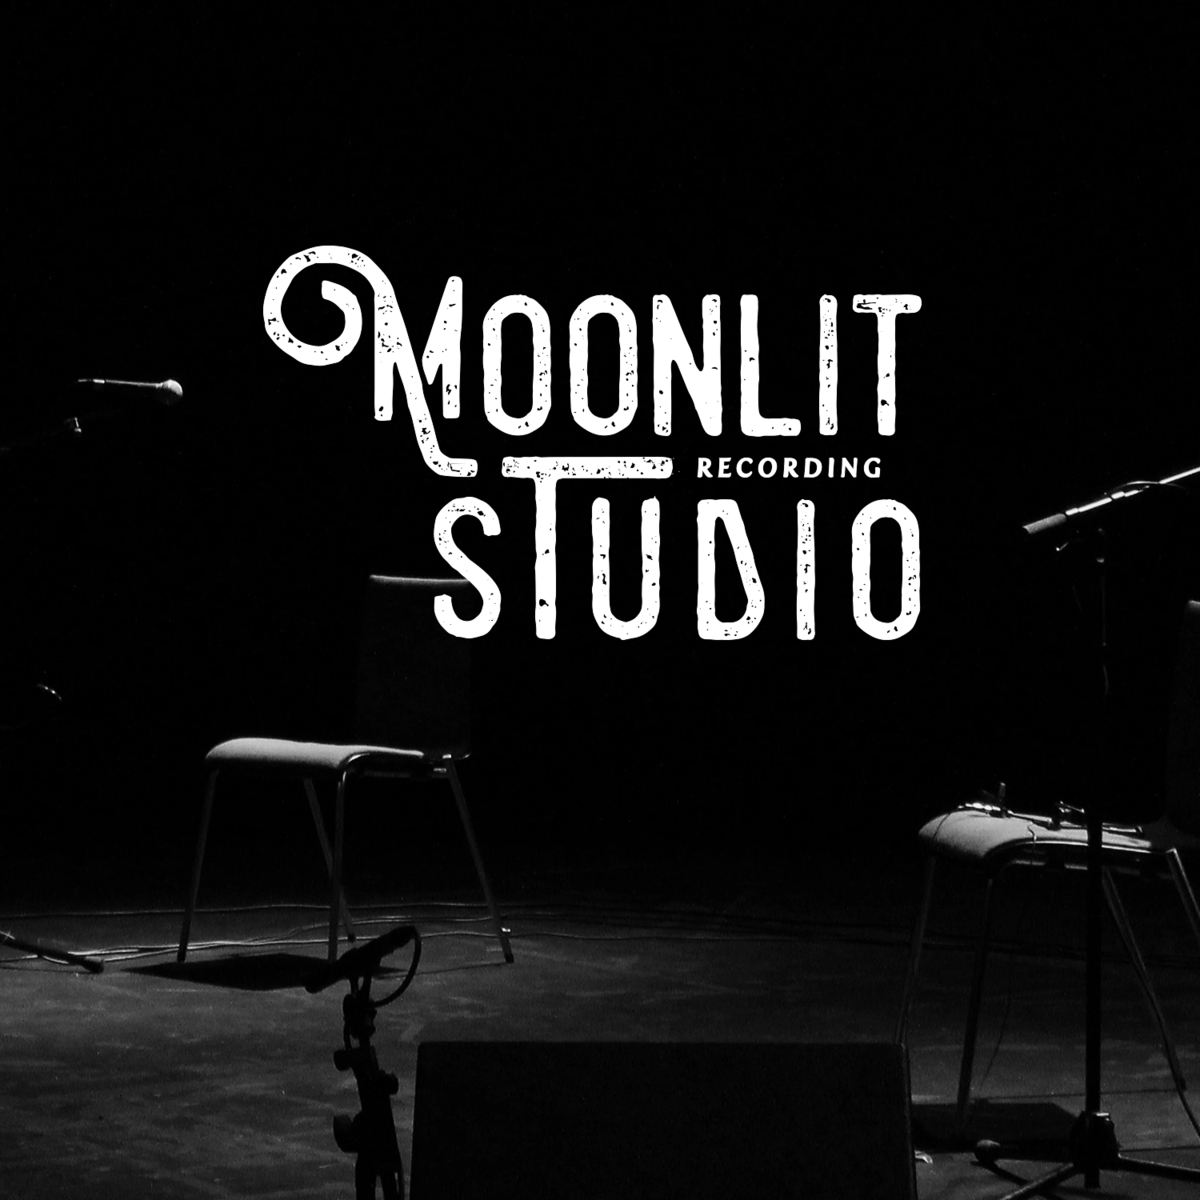 Moonlit studio brand photo